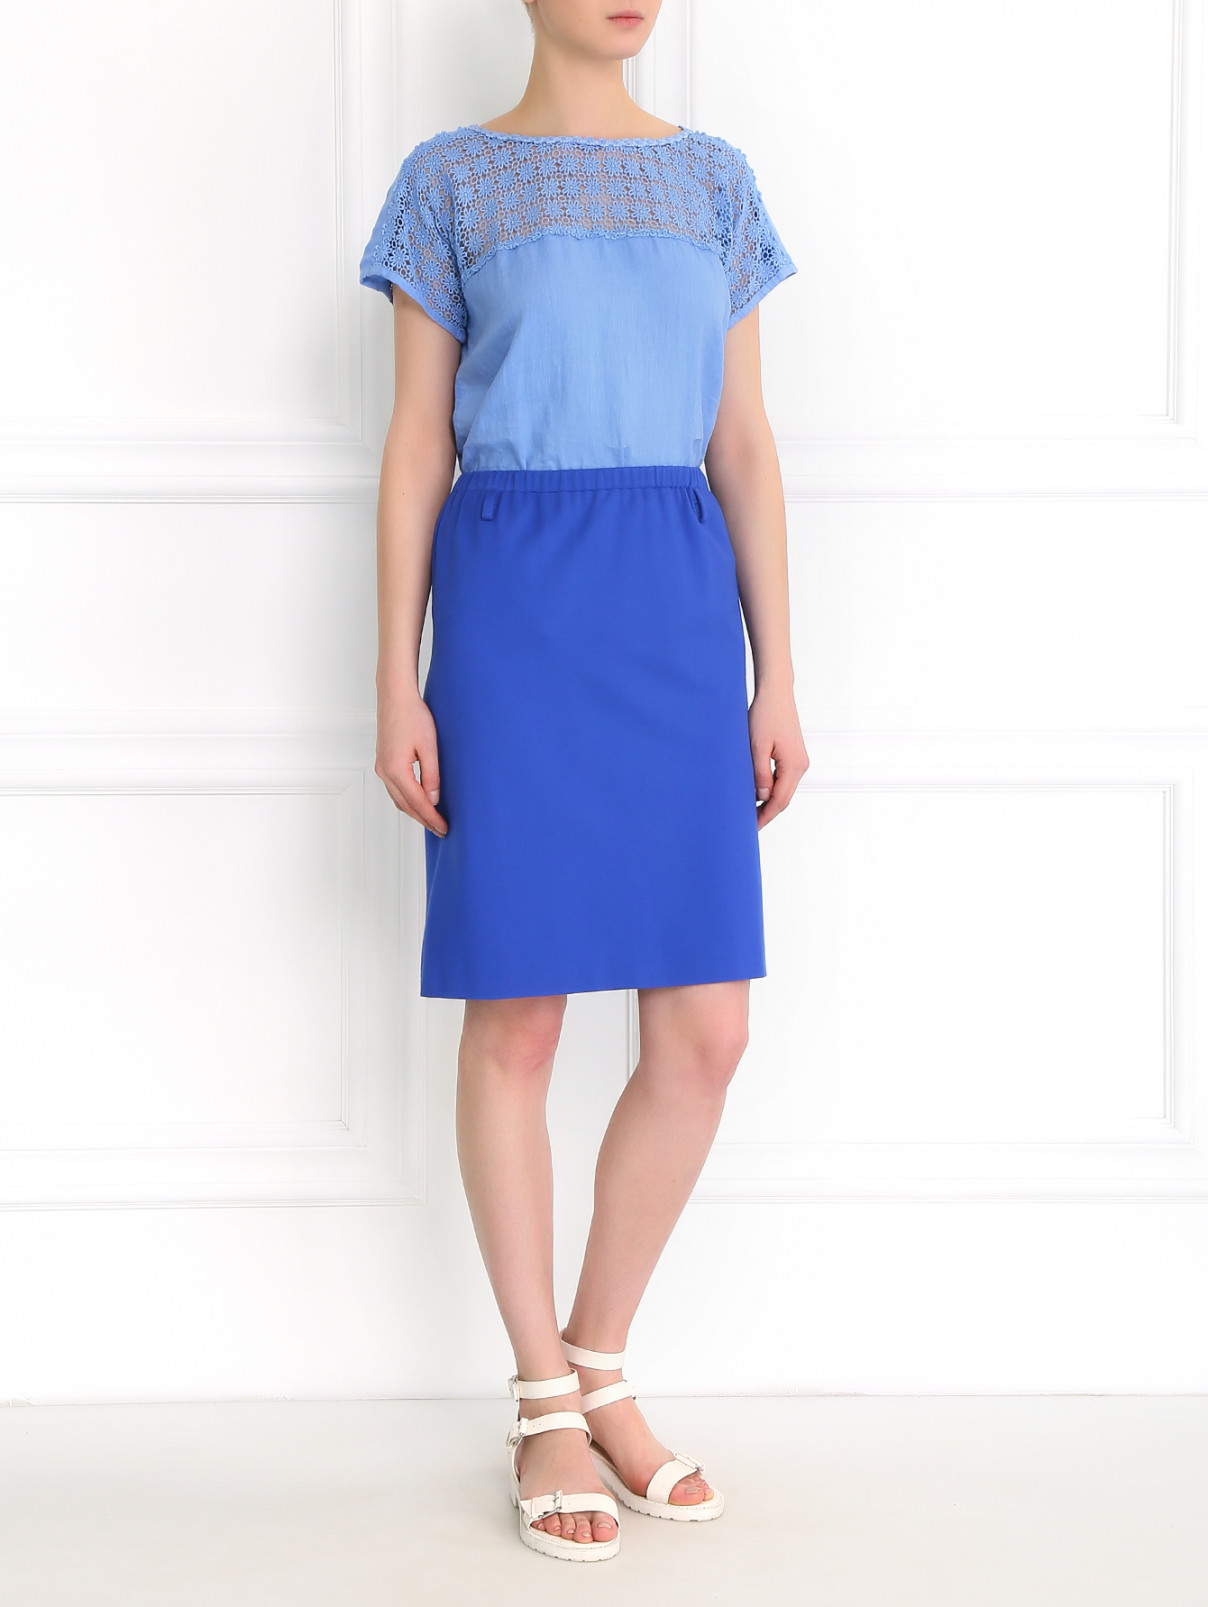 Трикотажная юбка на резинке Jil Sander  –  Модель Общий вид  – Цвет:  Синий